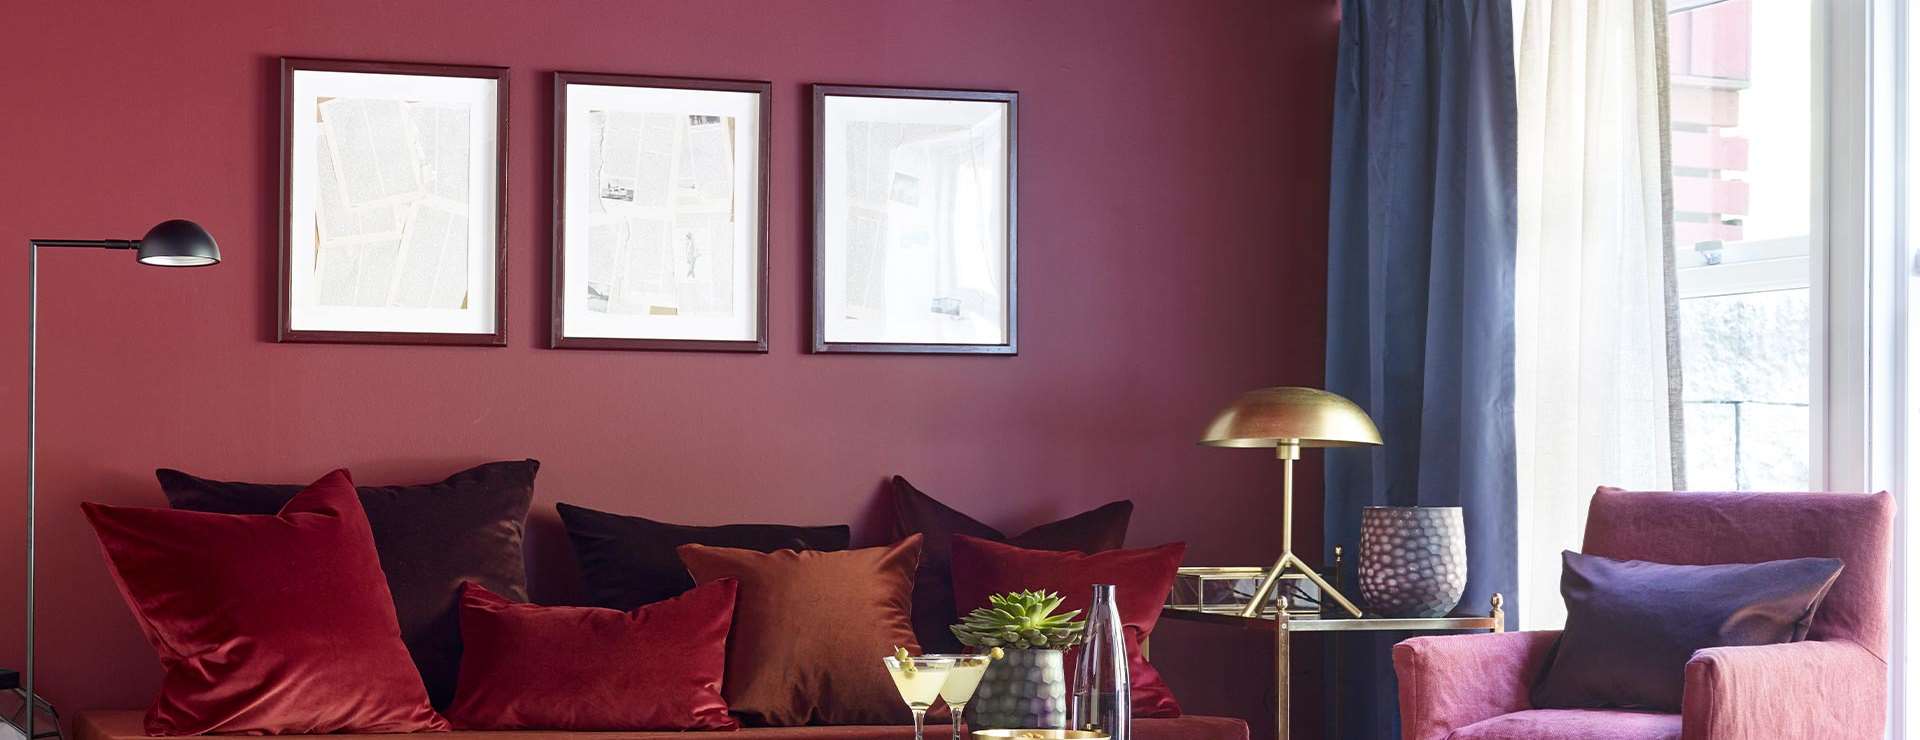 Stue med vegg, sofa, puter og stol i årets farge 2017 - rød